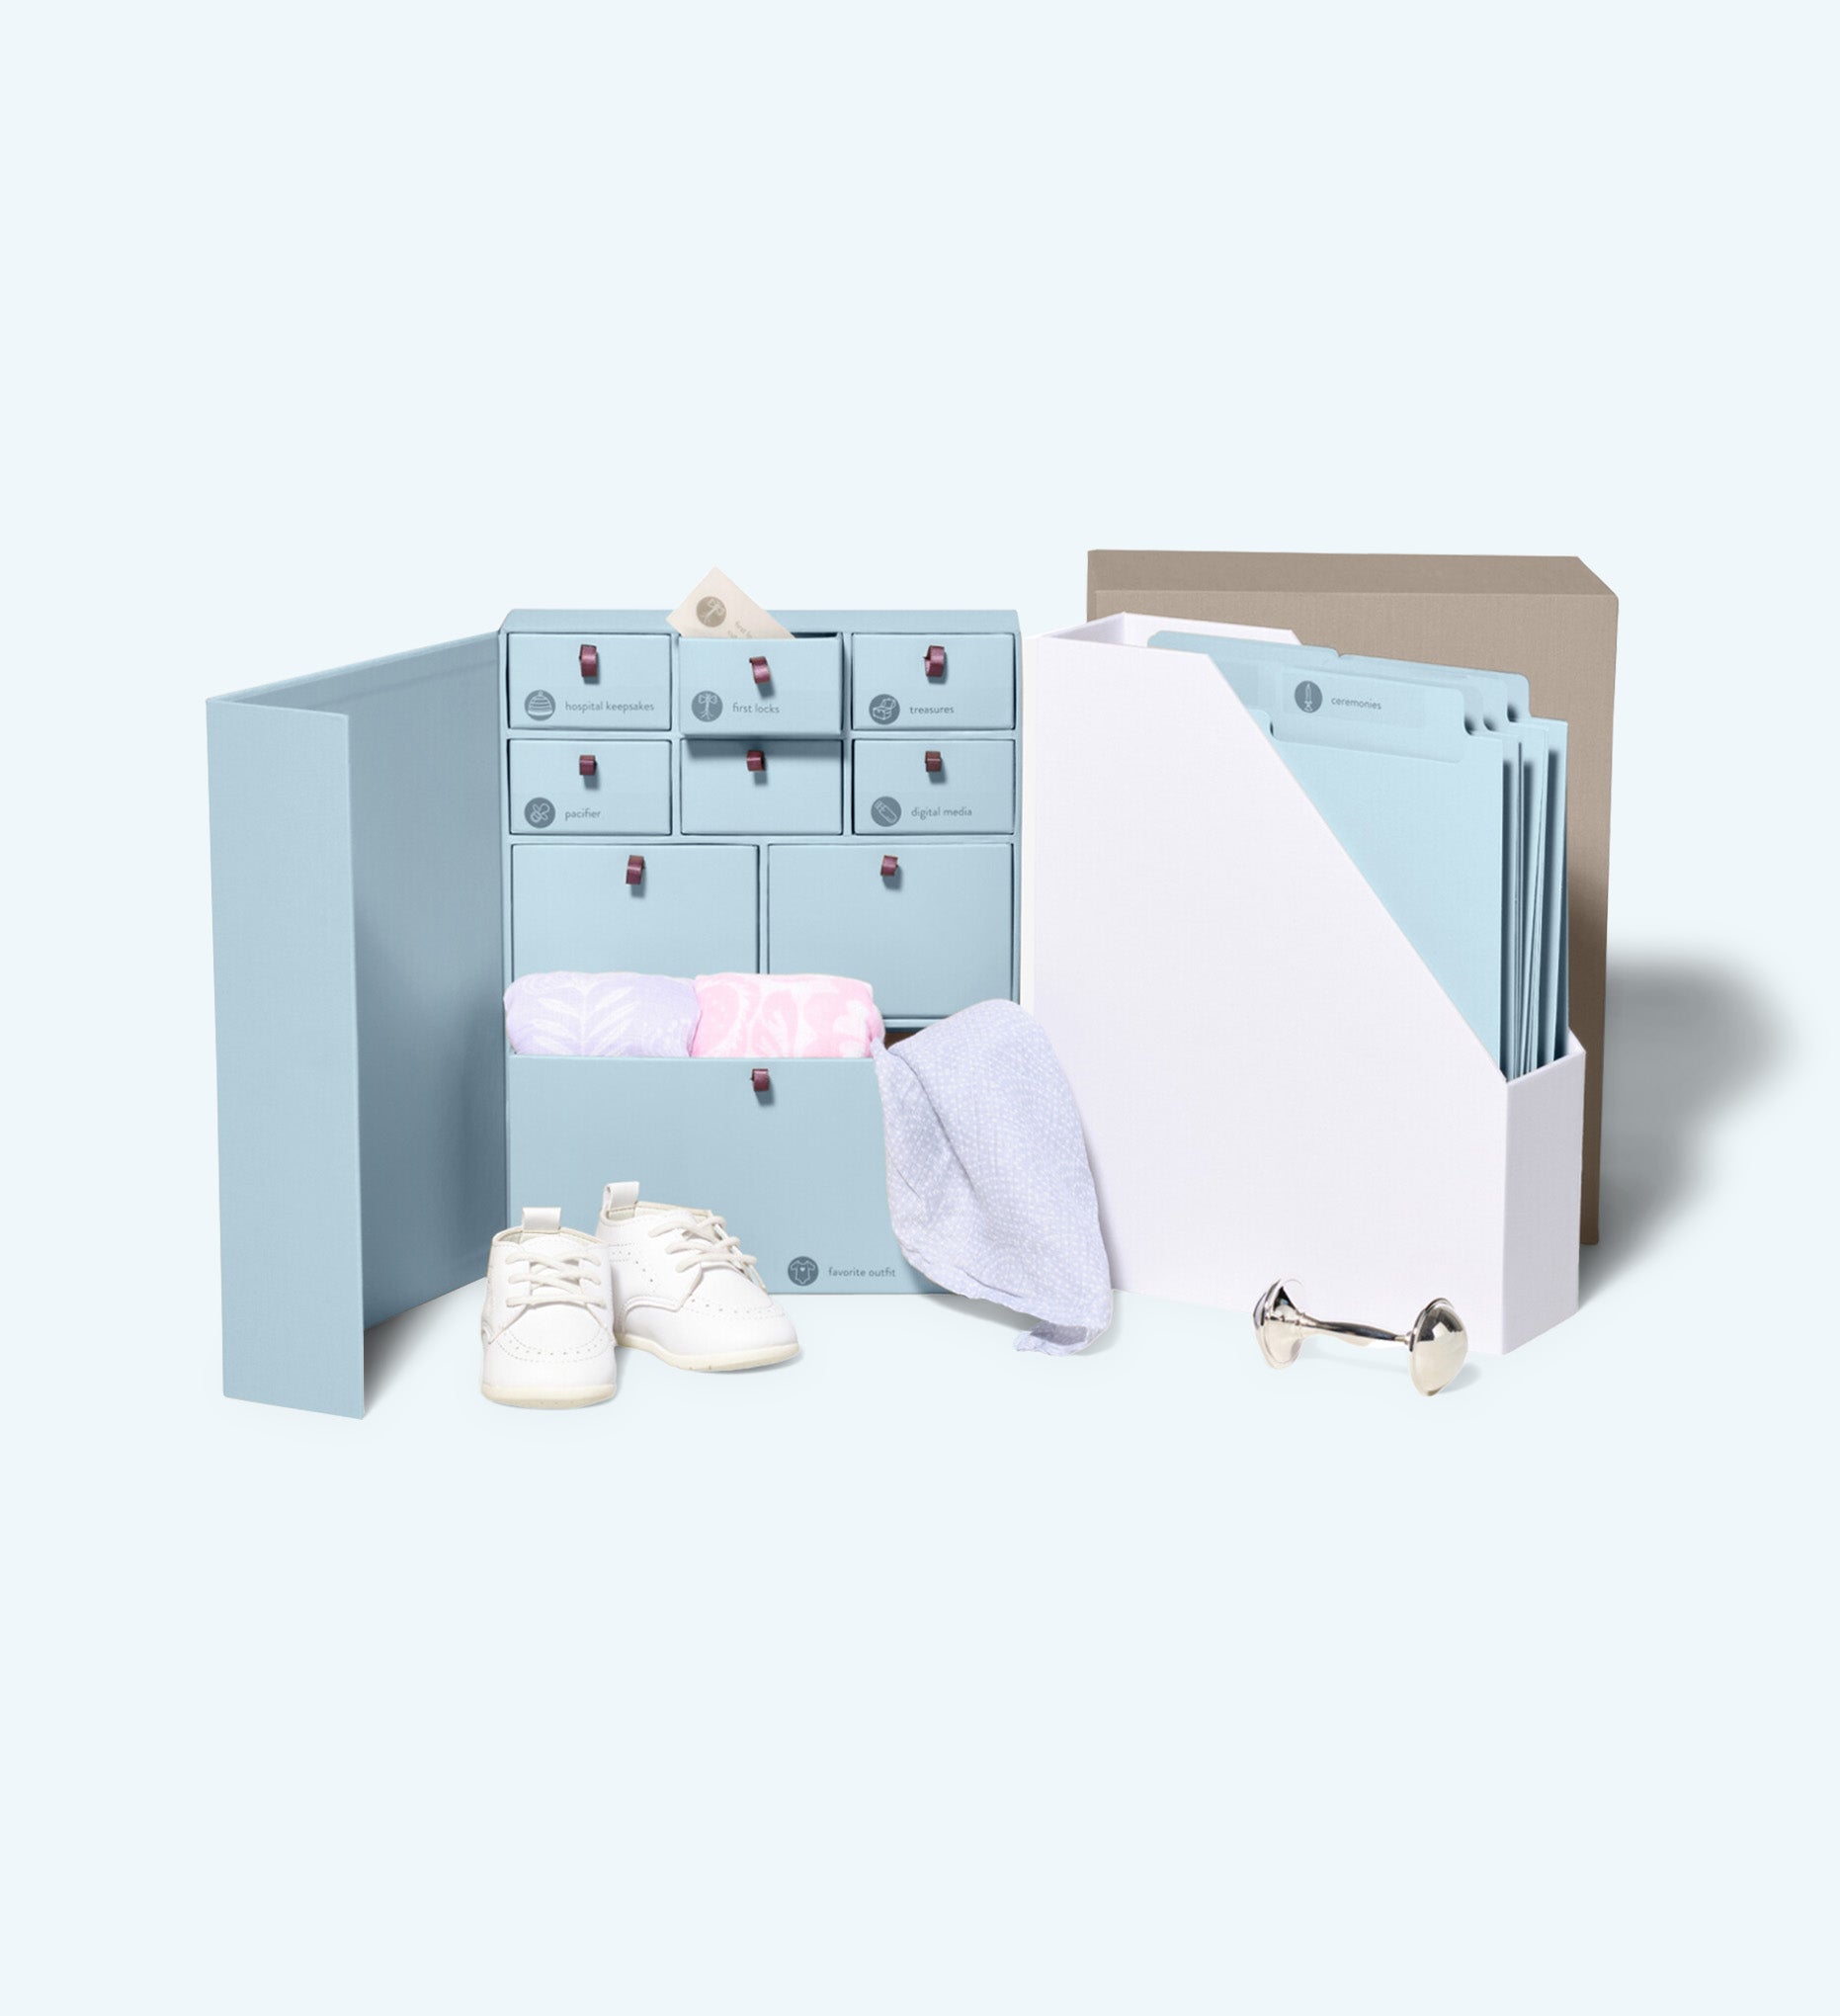 Open sky babby deluxe keepsake box with baby props.